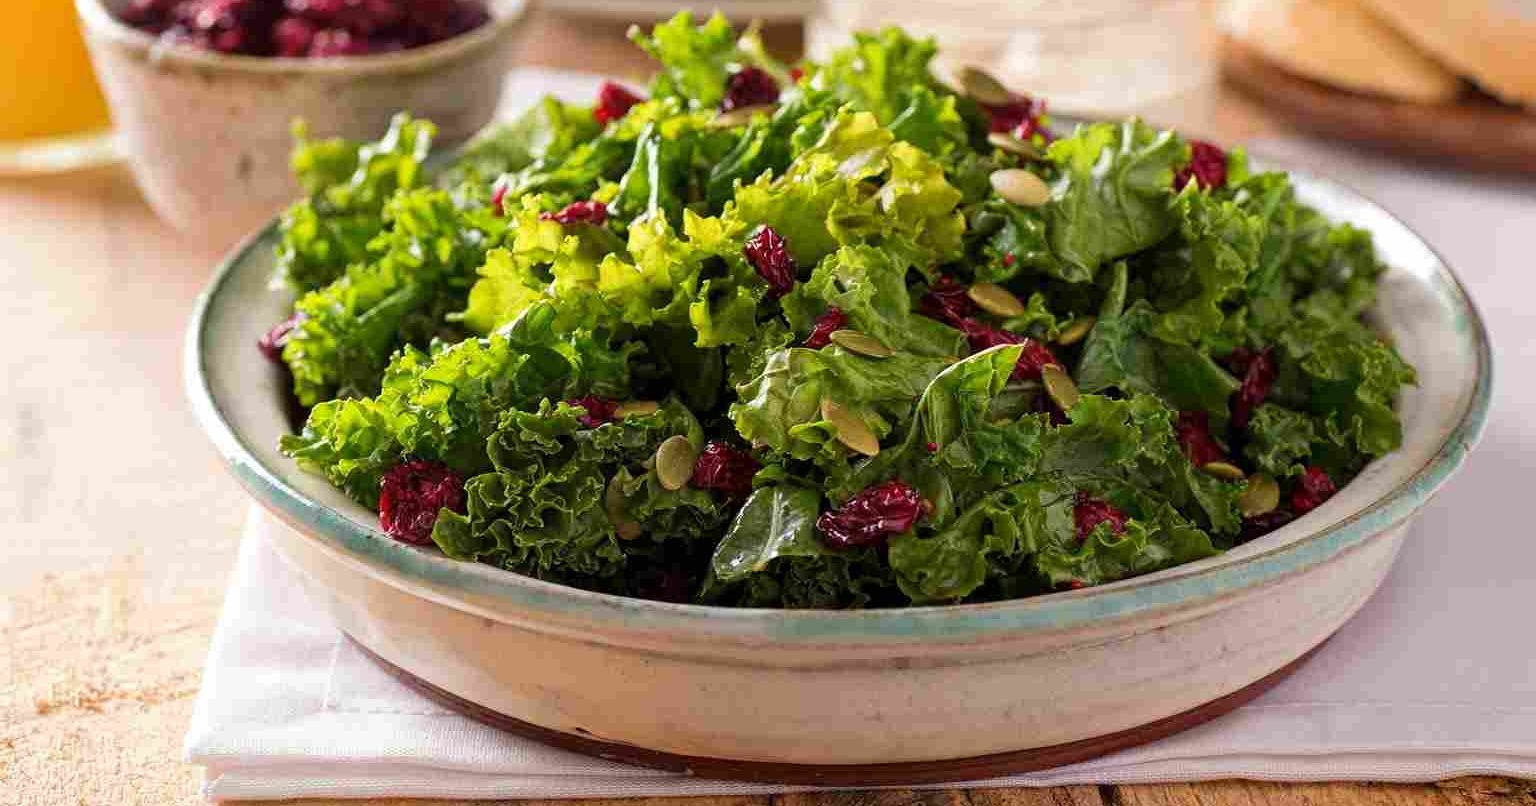 Kale salad with raisins